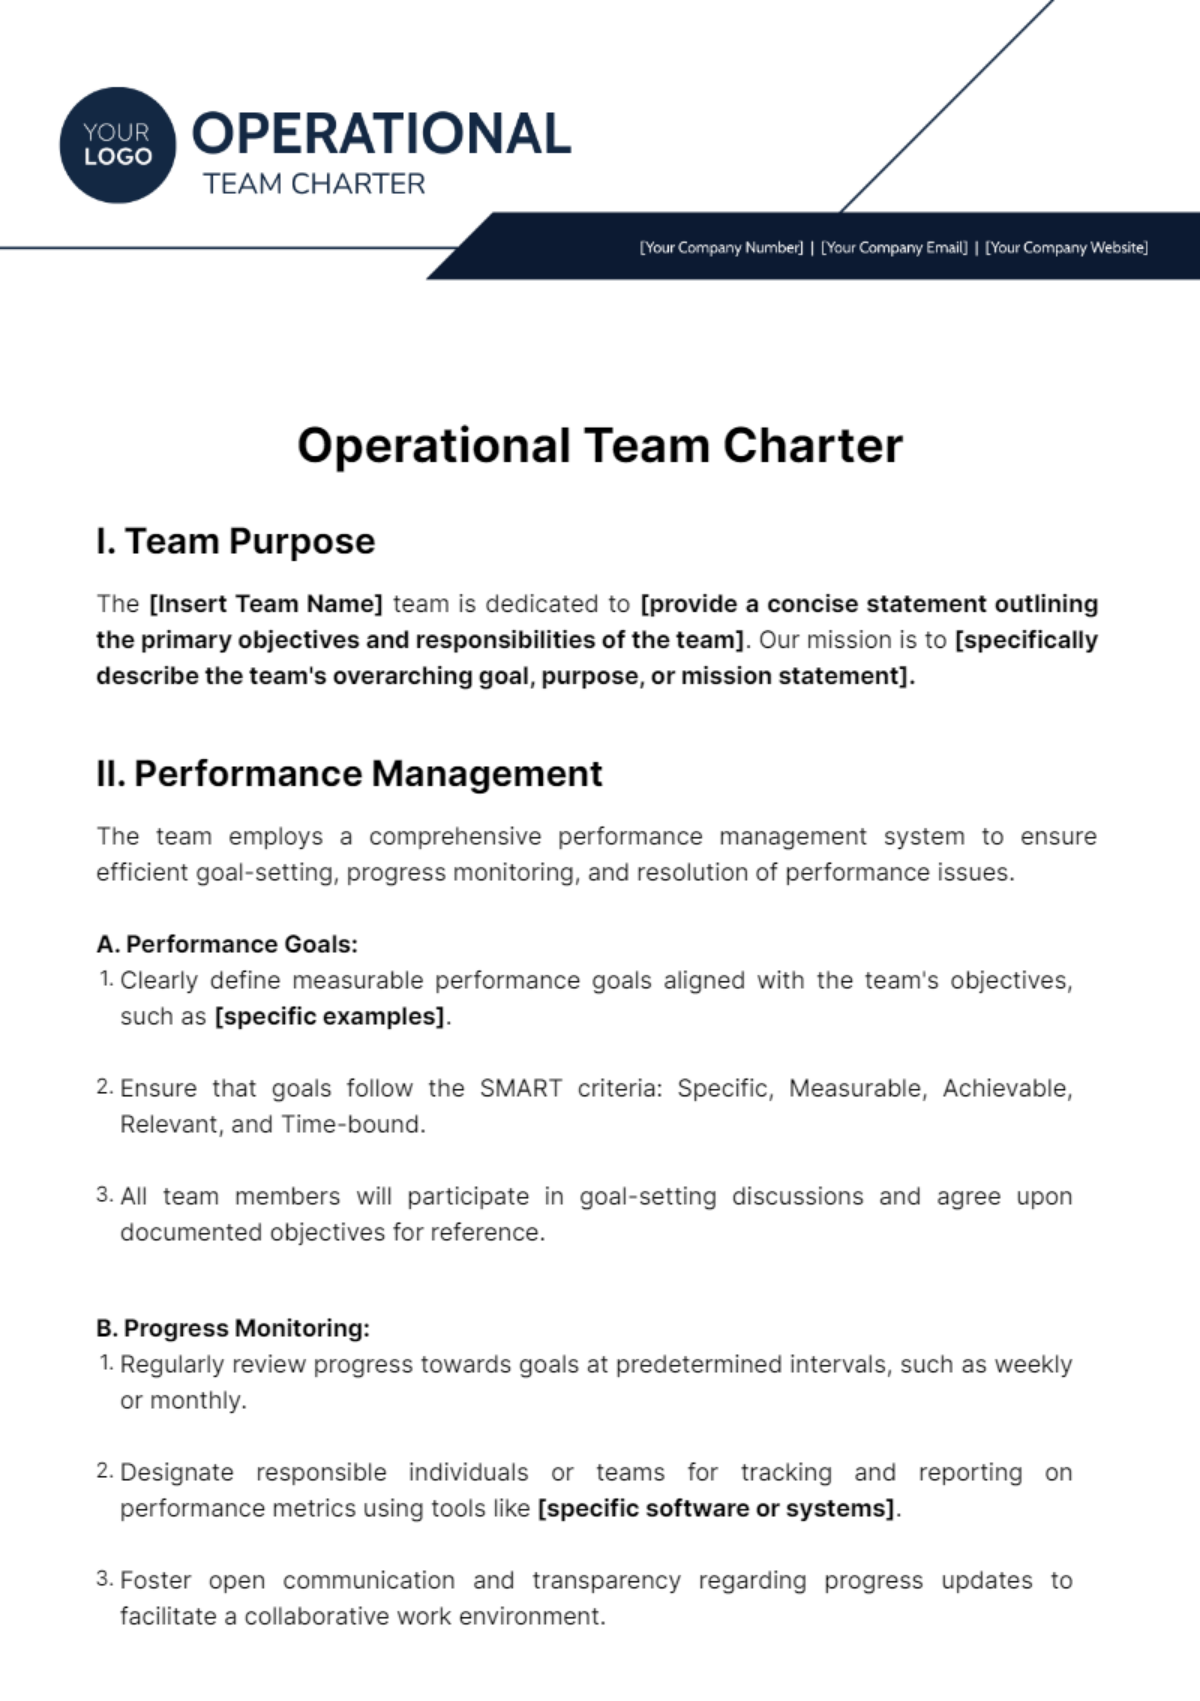 Operational Team Charter Template